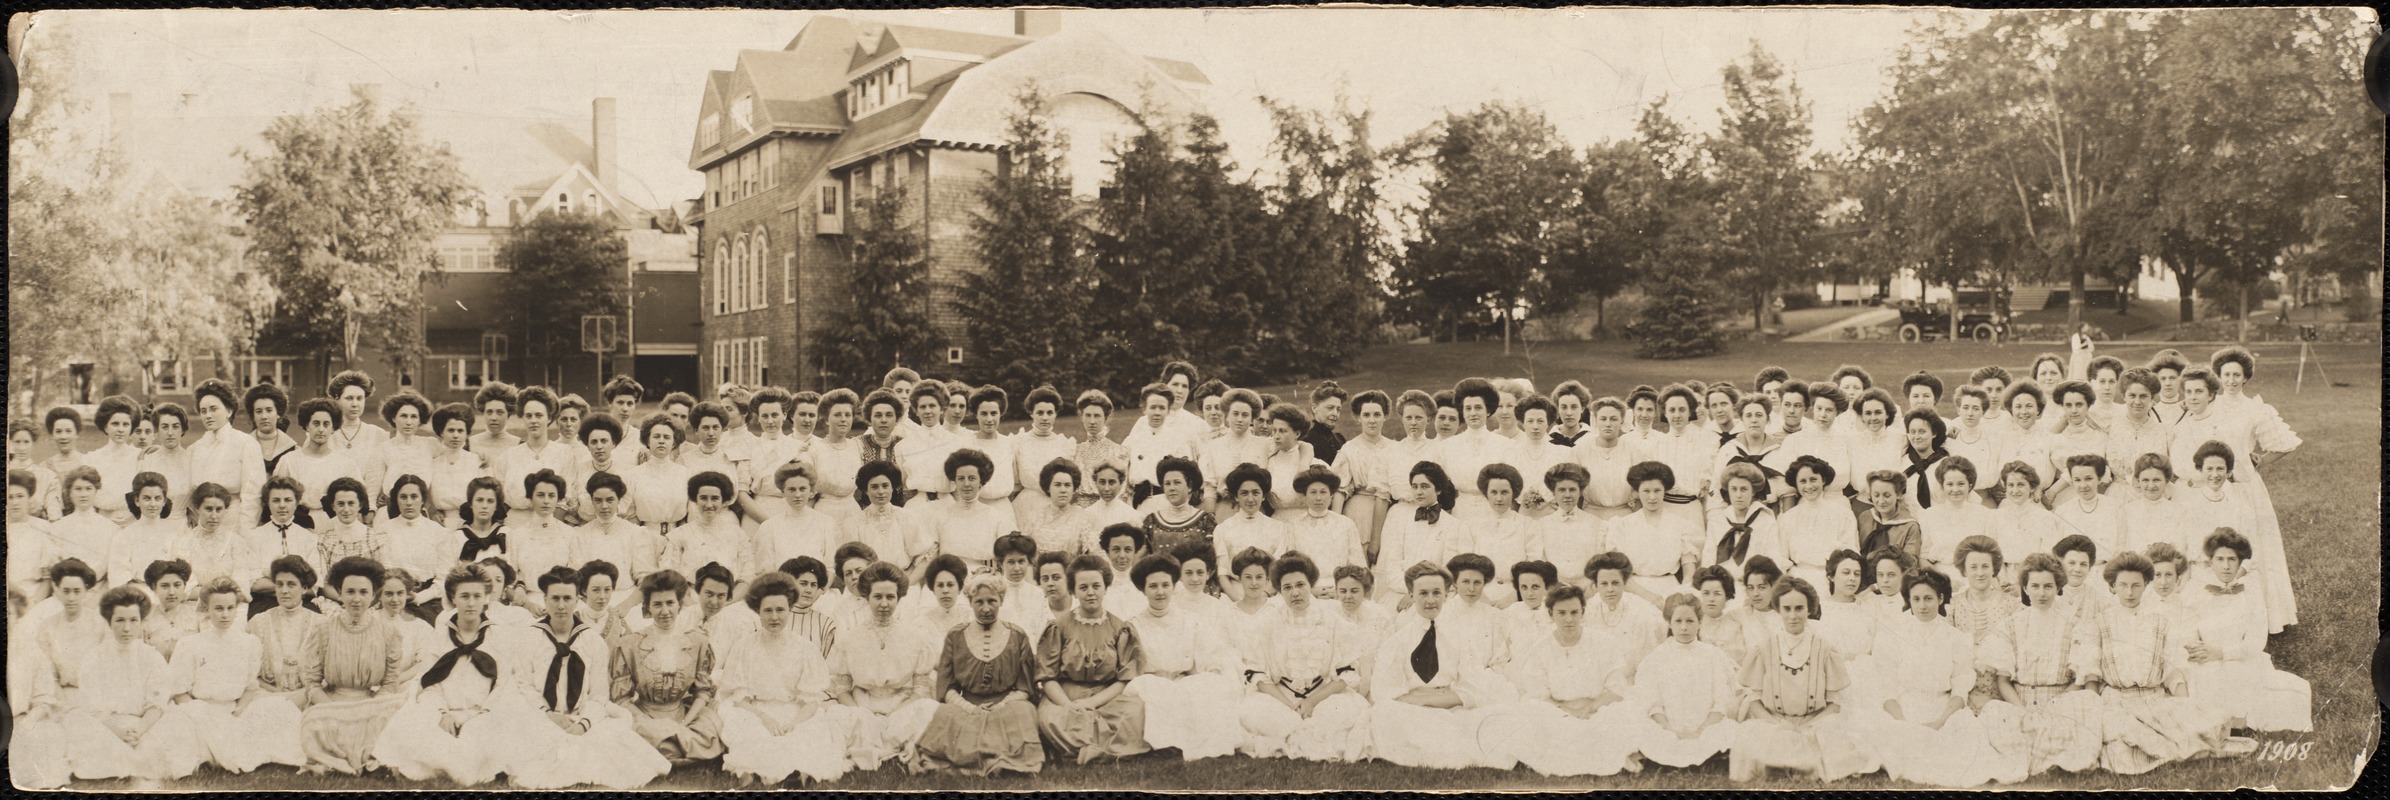 Dana Hall Students 1908 with Helen Temple Cooke, Principal